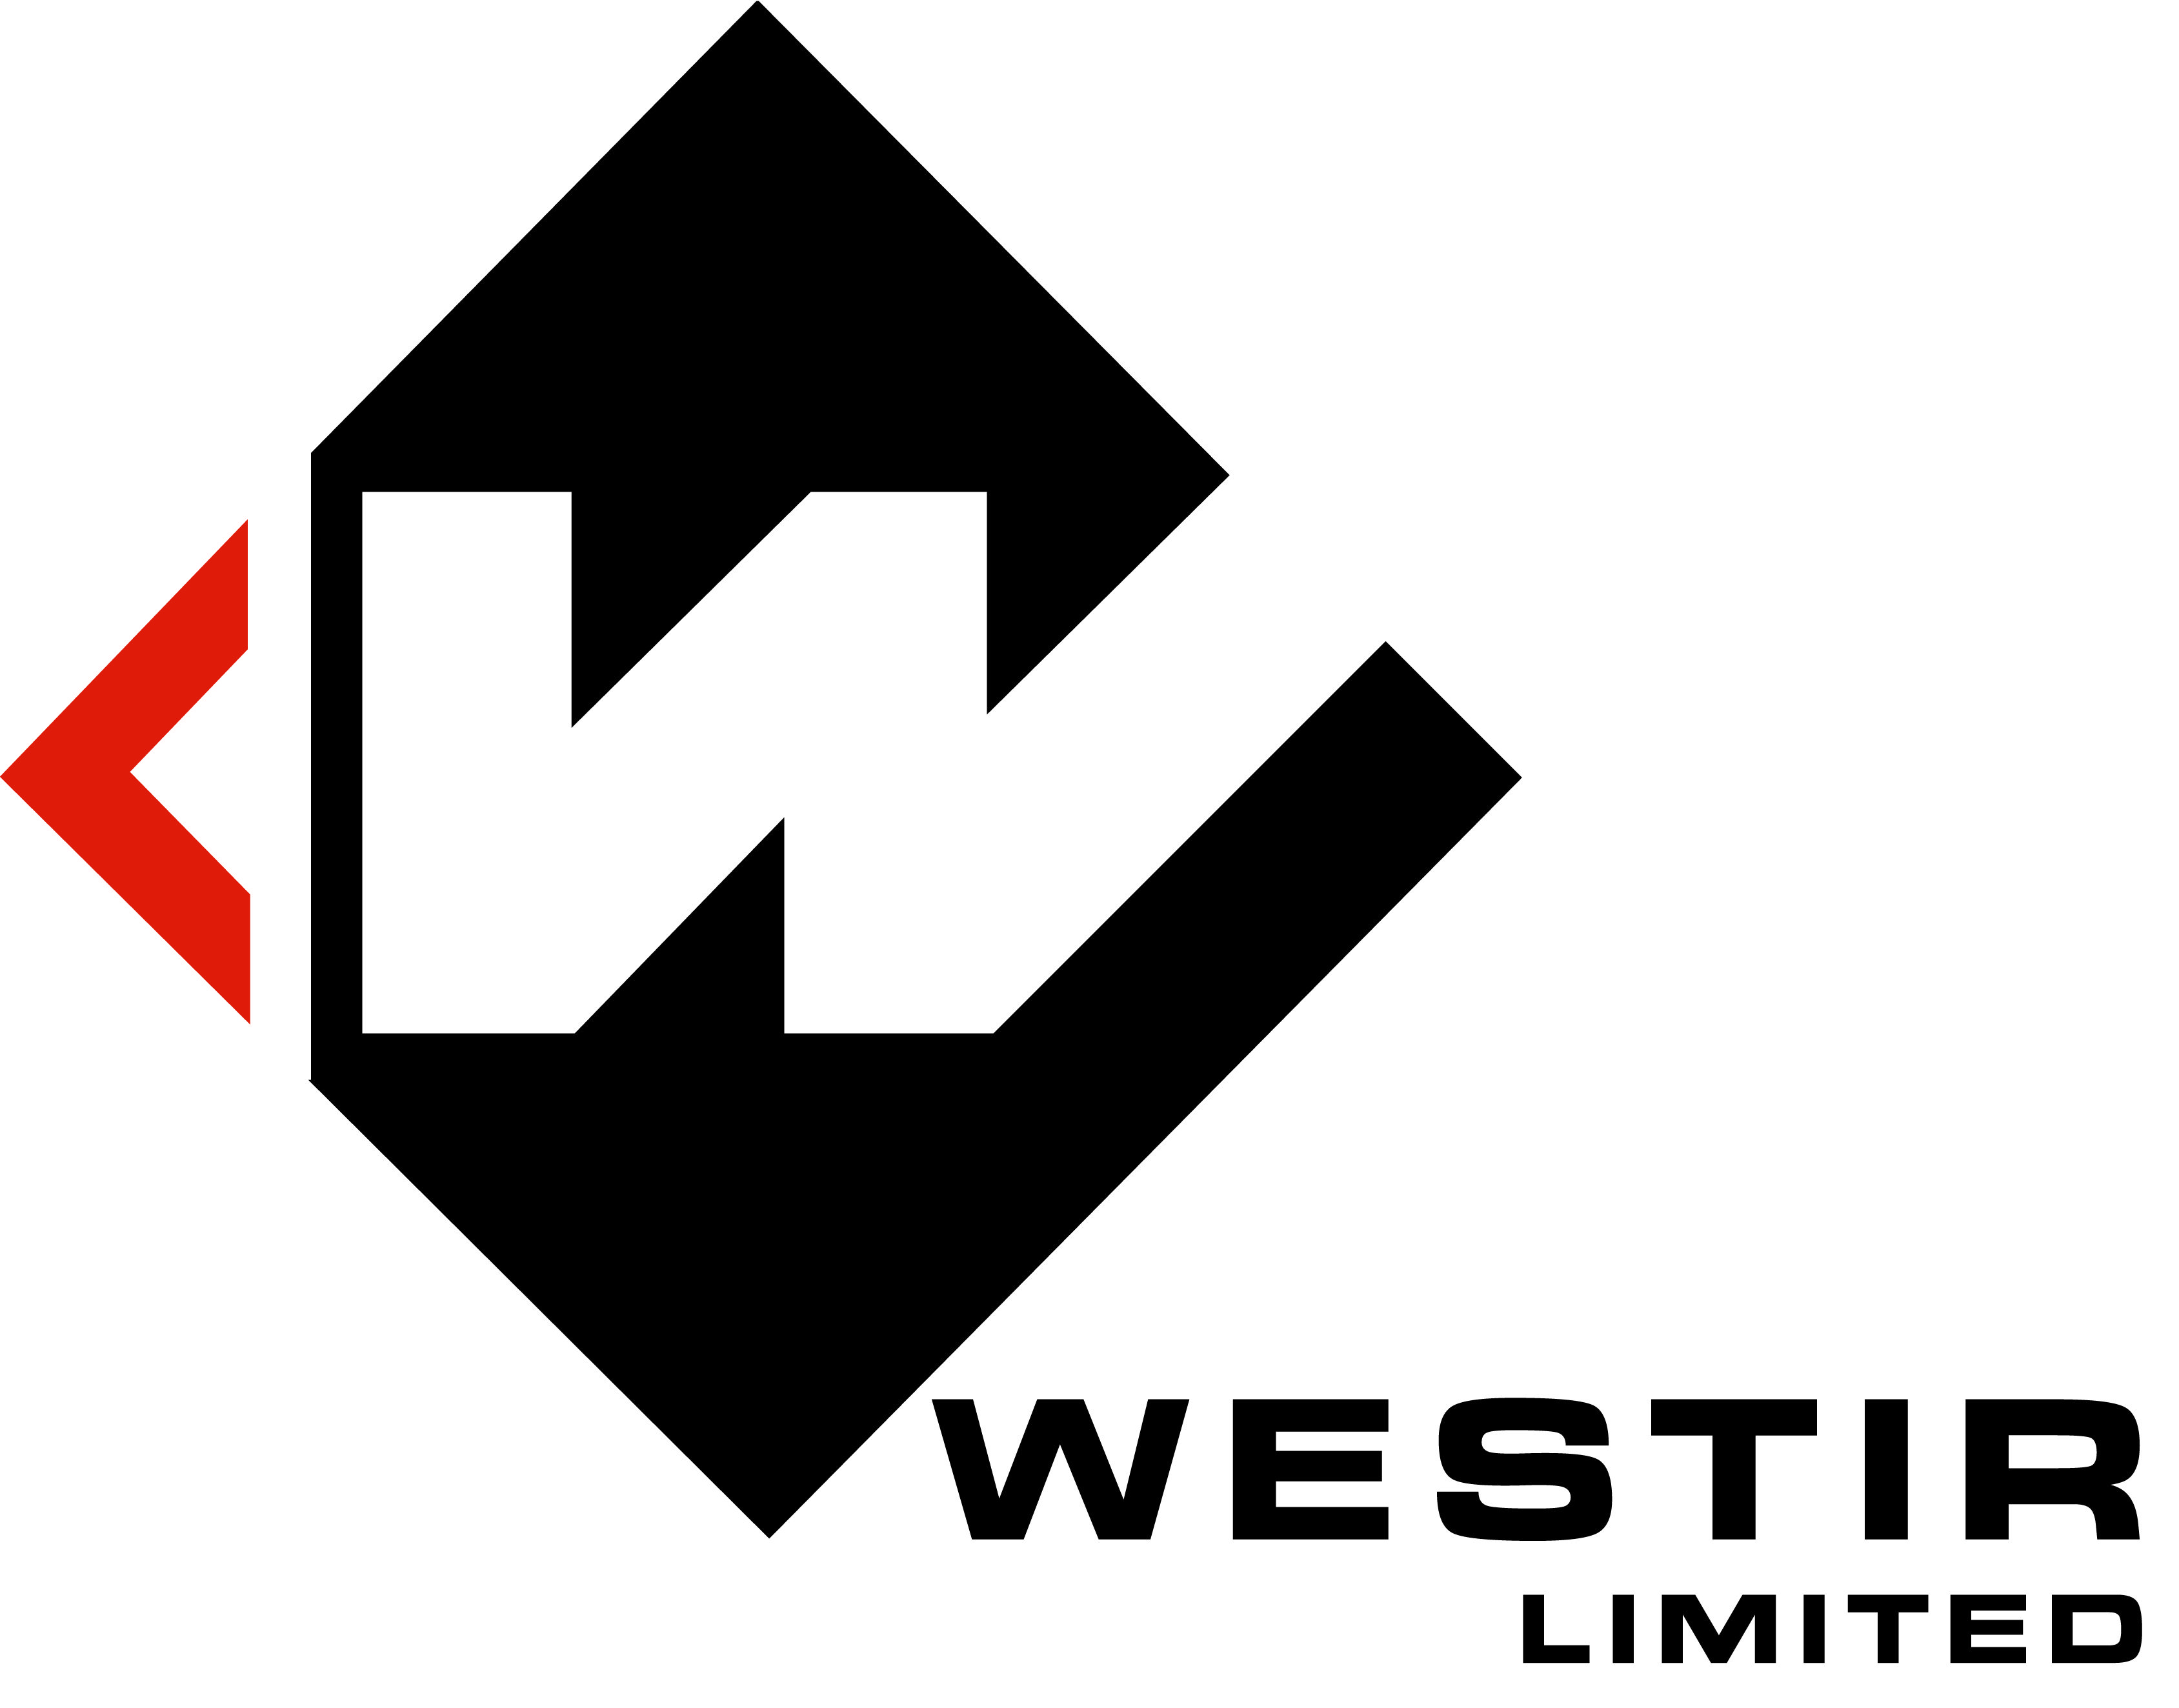 WESTIR Ltd